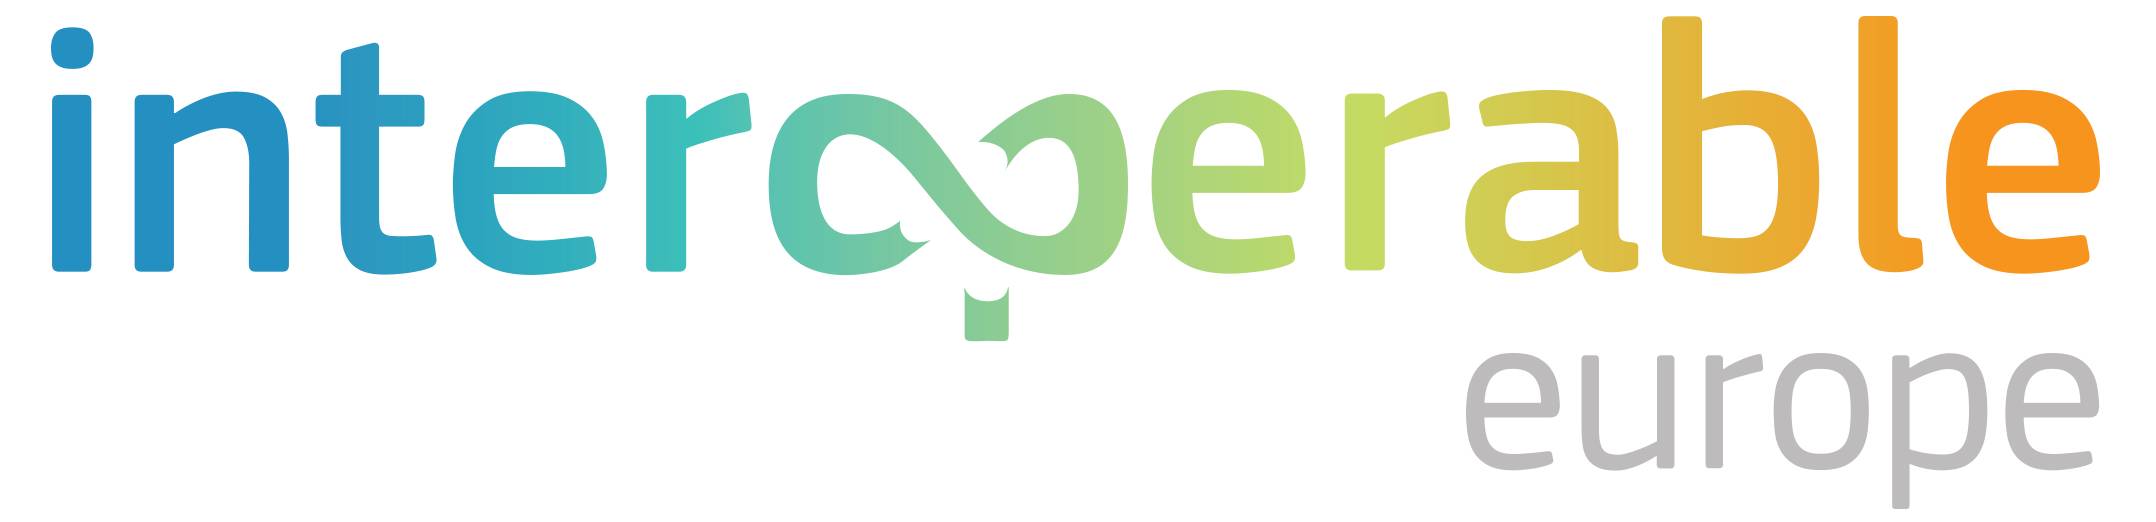 Interoperable_europe_logo